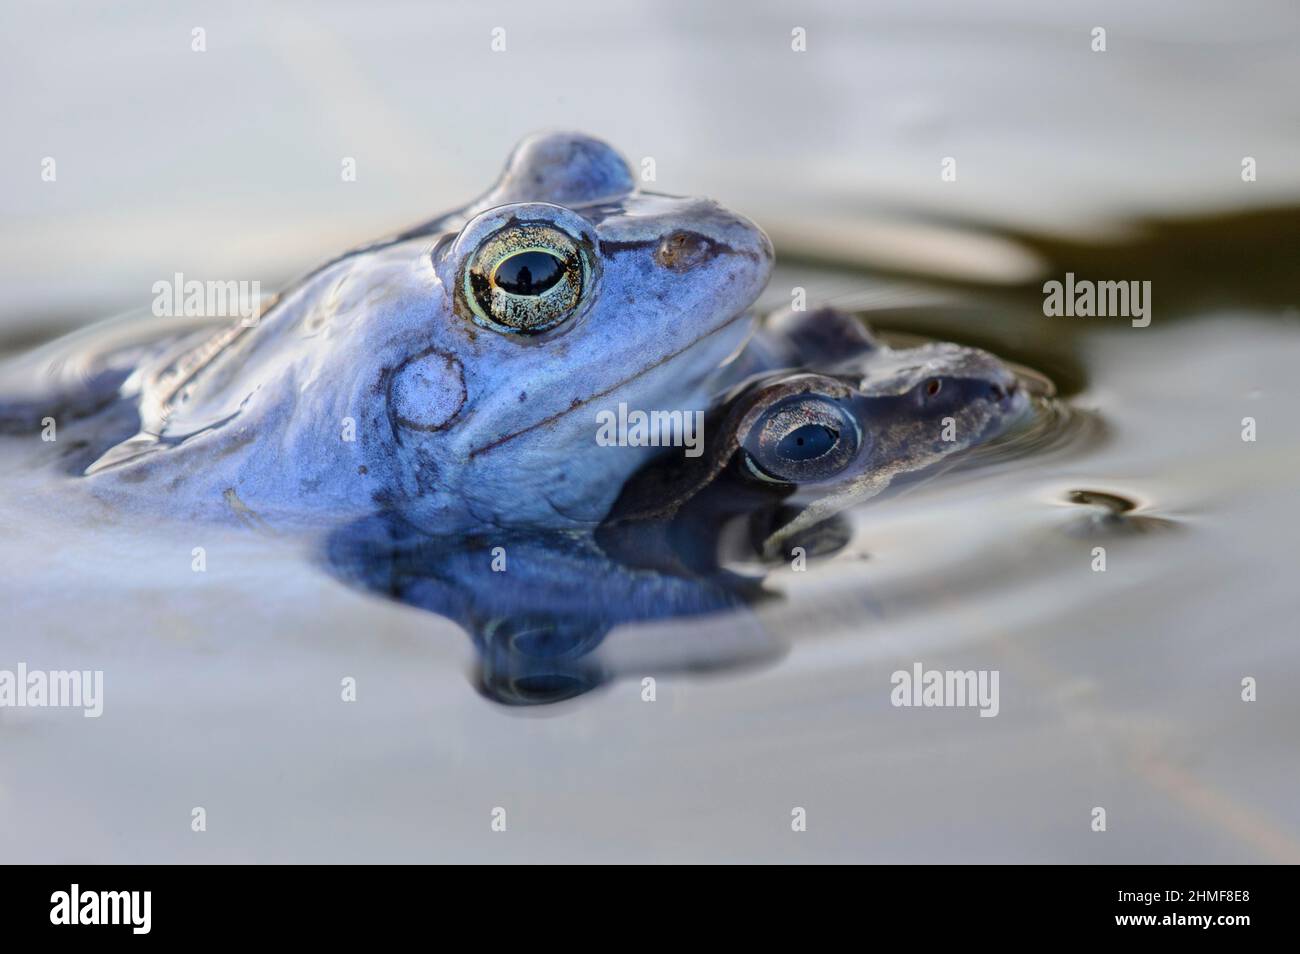 Moor frog, Goldenstedt, Lower Saxony Stock Photo